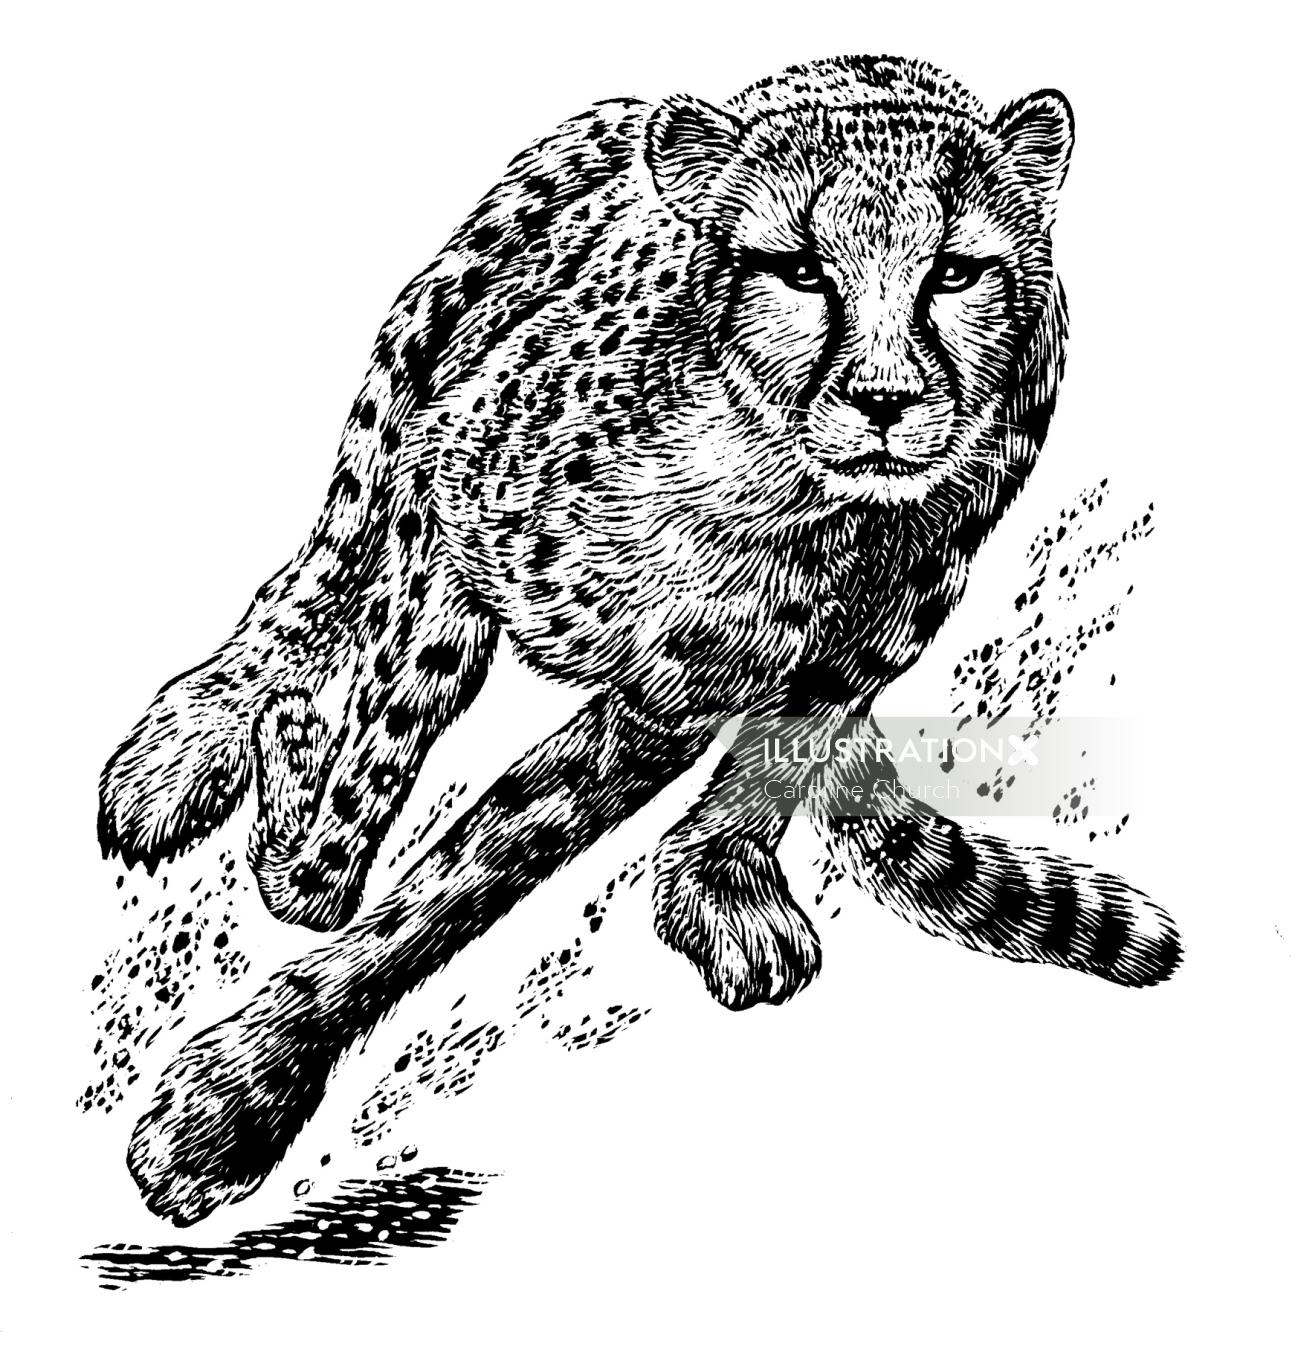 Cheetah illustration
